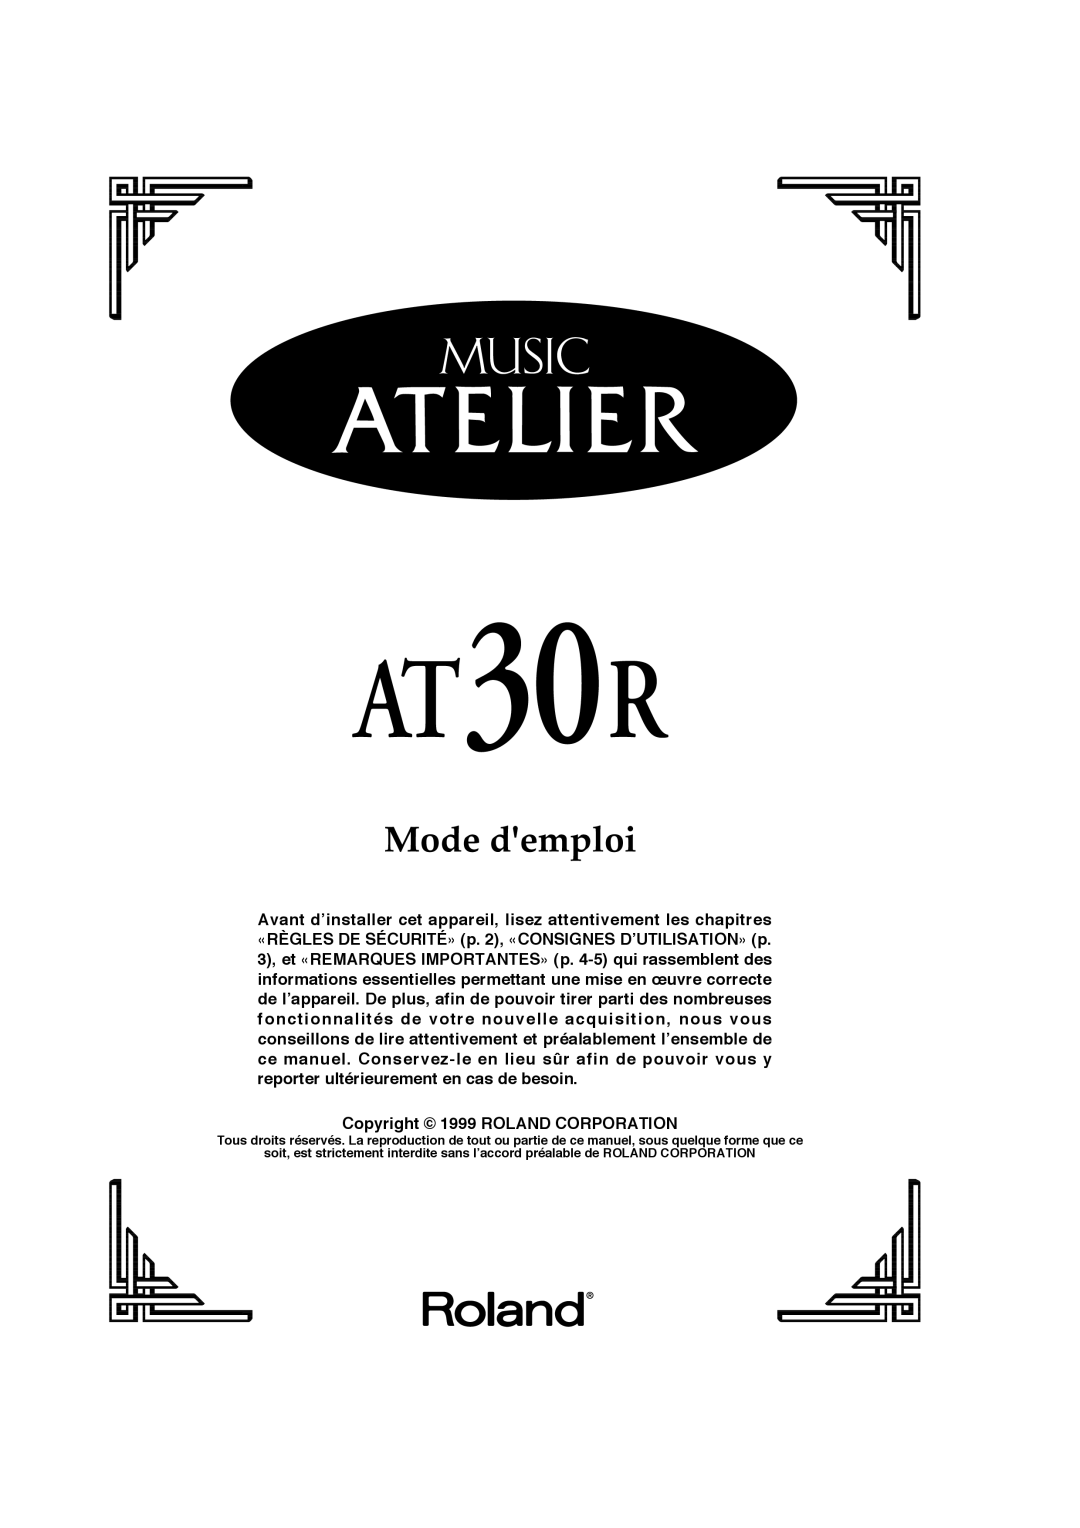 Roland AT30R manual Copyright 1999 ROLAND CORPORATION 